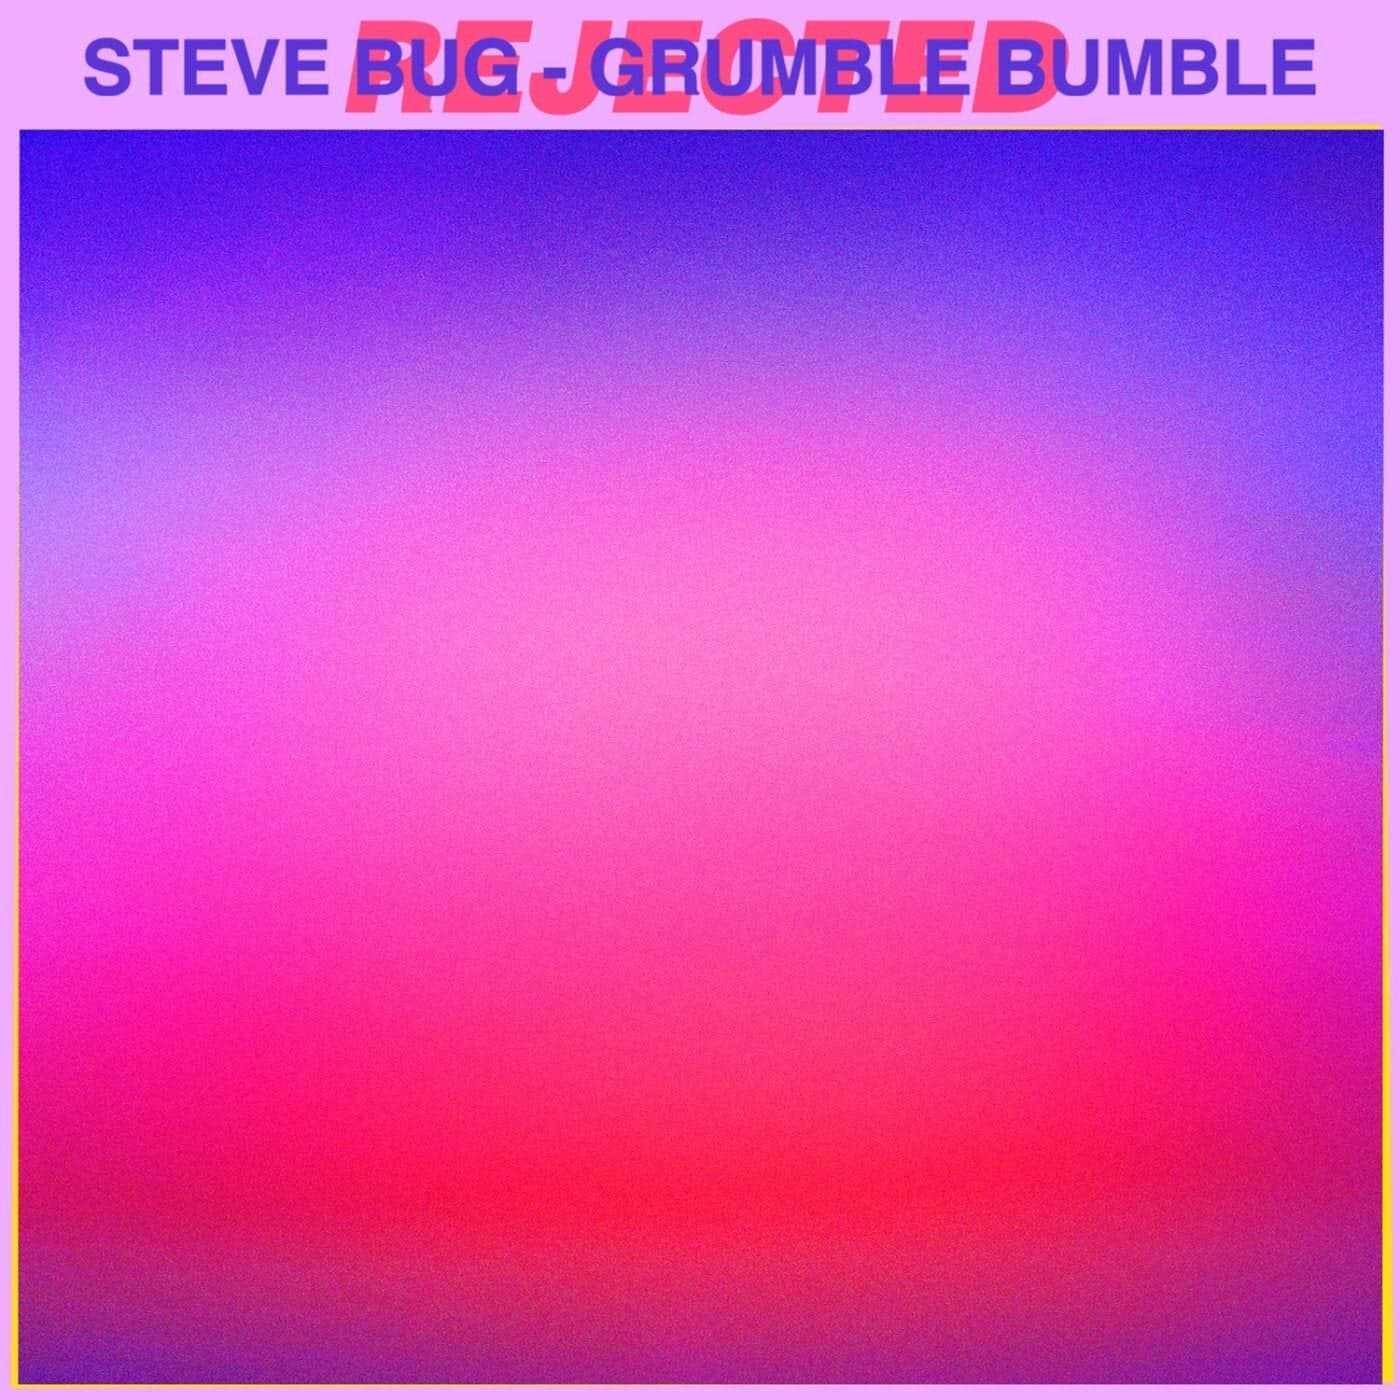 Download Steve Bug - Grumble Bumble on Electrobuzz